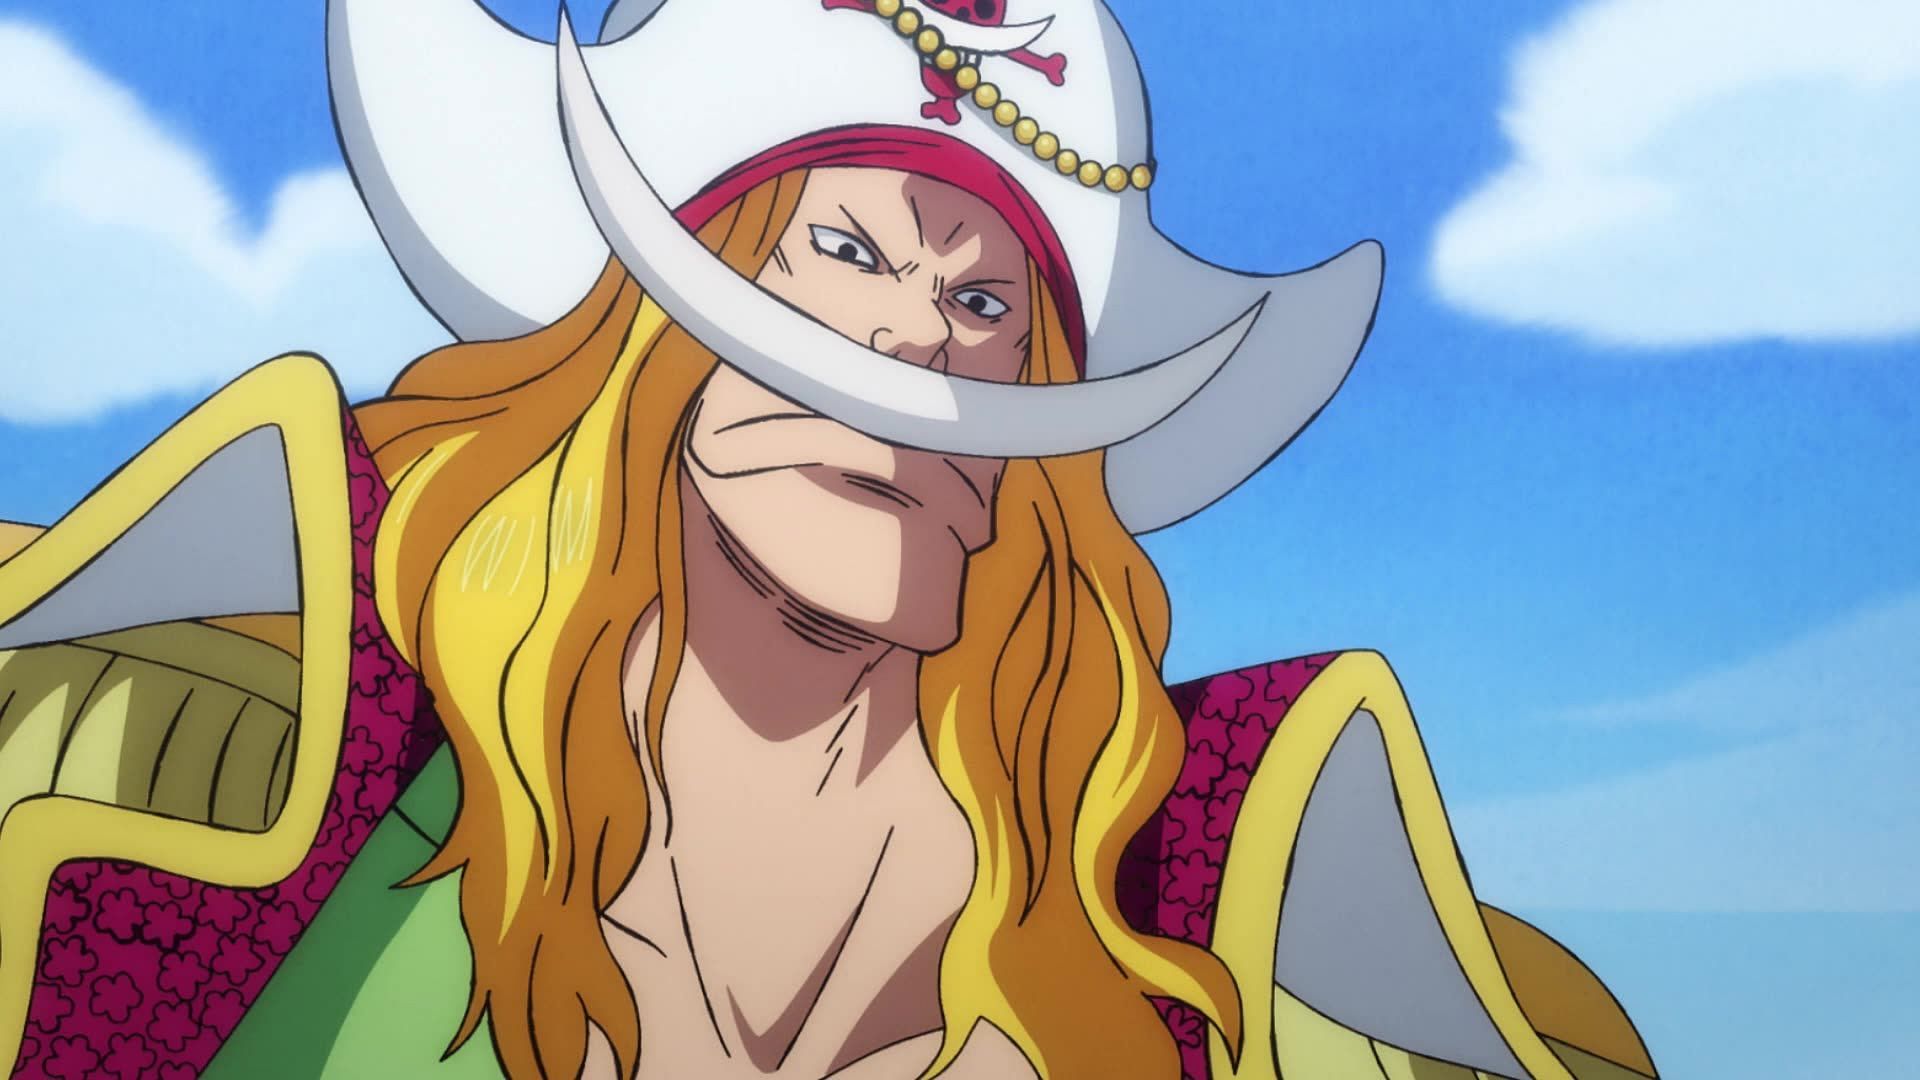 Anime Series One Piece Helping Lockdown - AVO Magazine - One click closer  to Japan